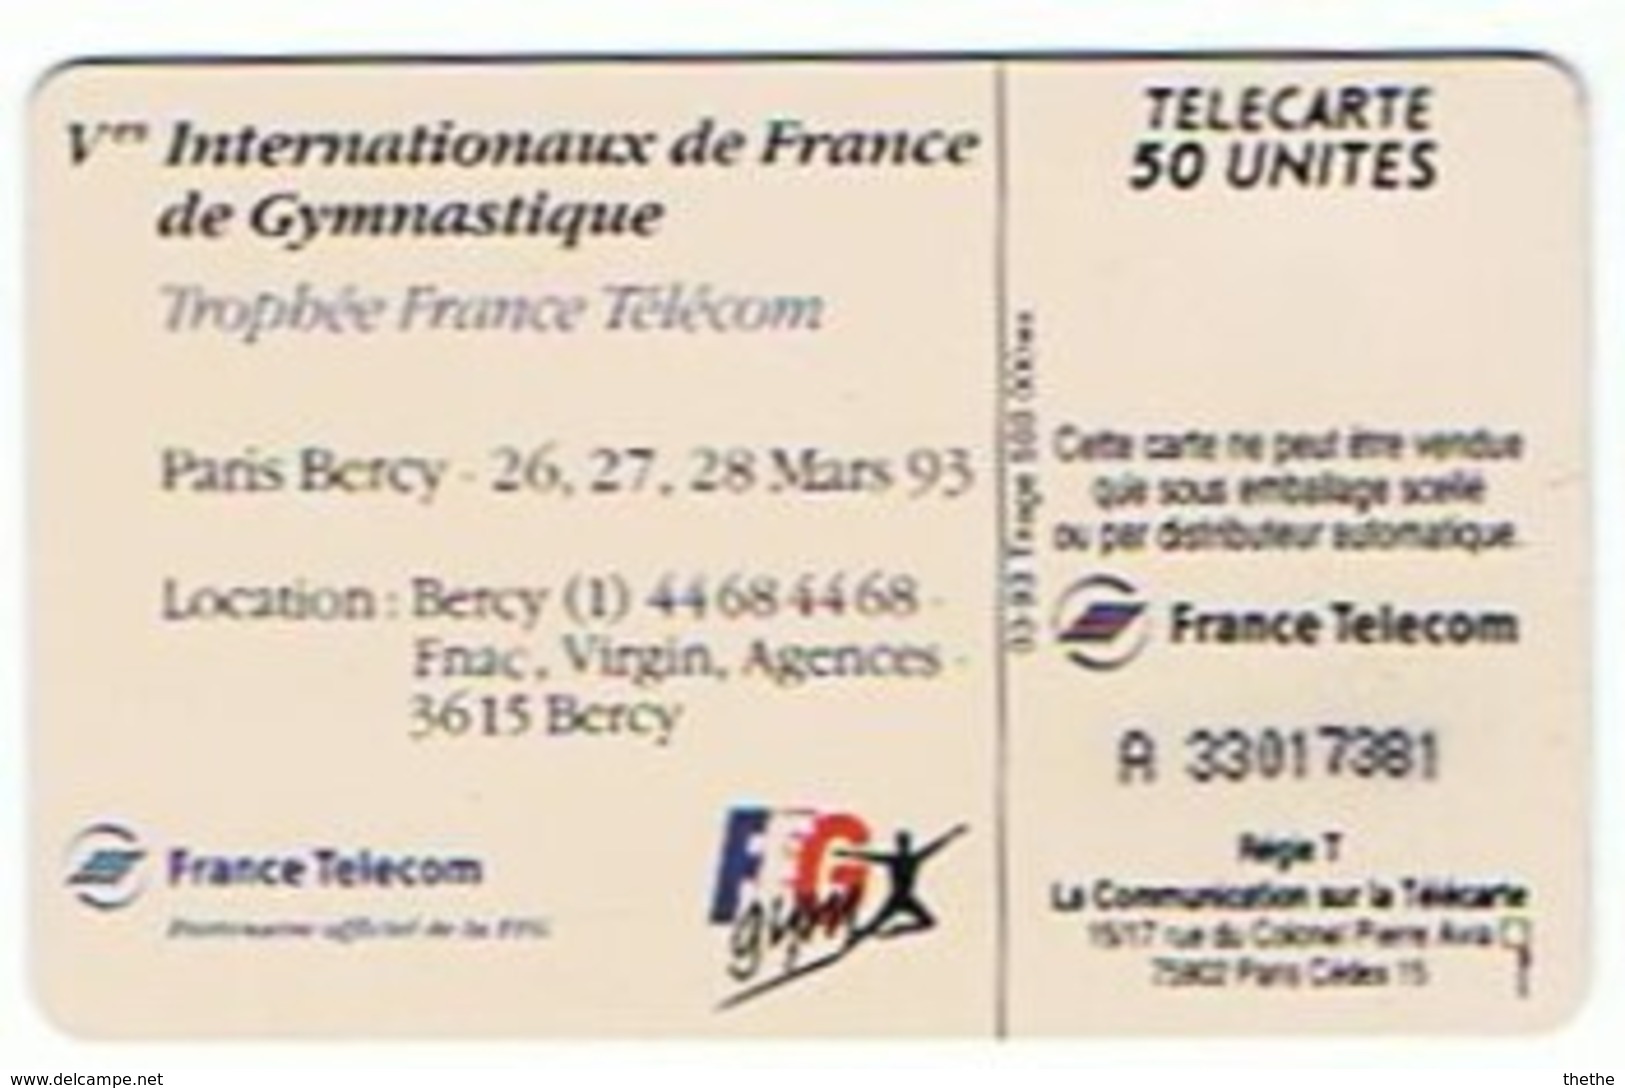 GYMNASTIQUE - Vèmes Internationaux De France De Gymnastique 1993 - Sport